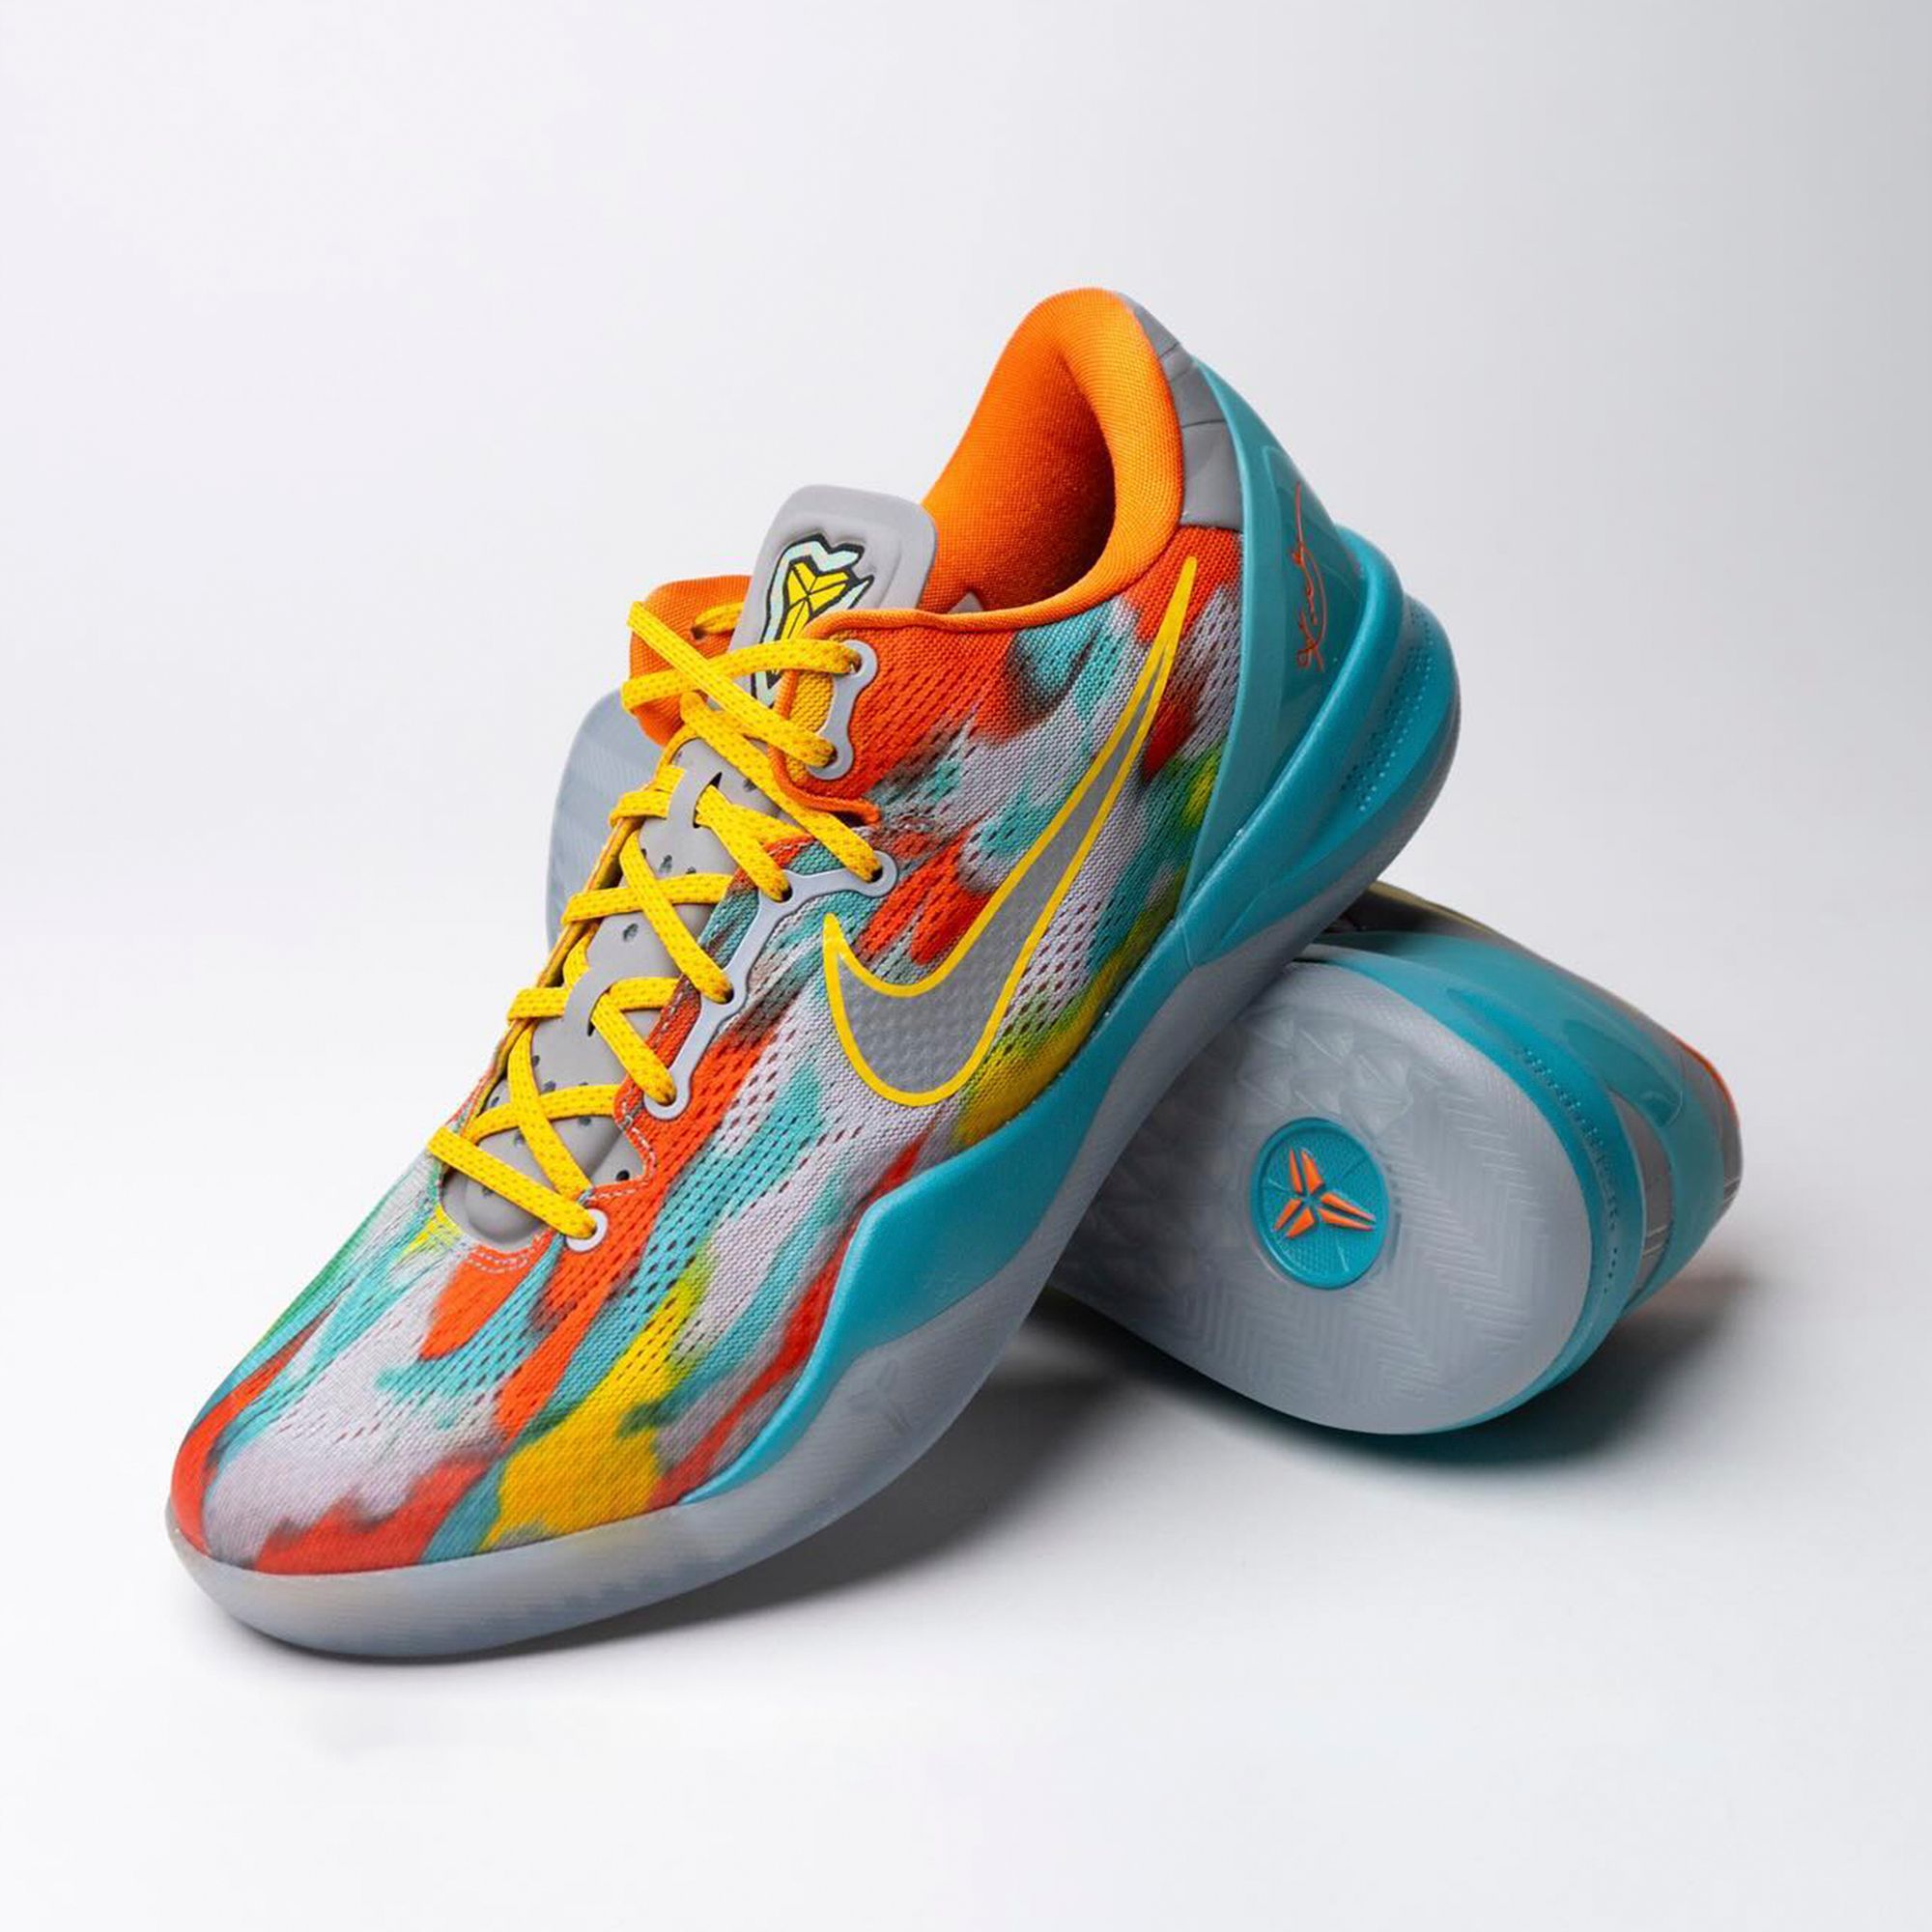 Detailed Looks // Nike Kobe 8 